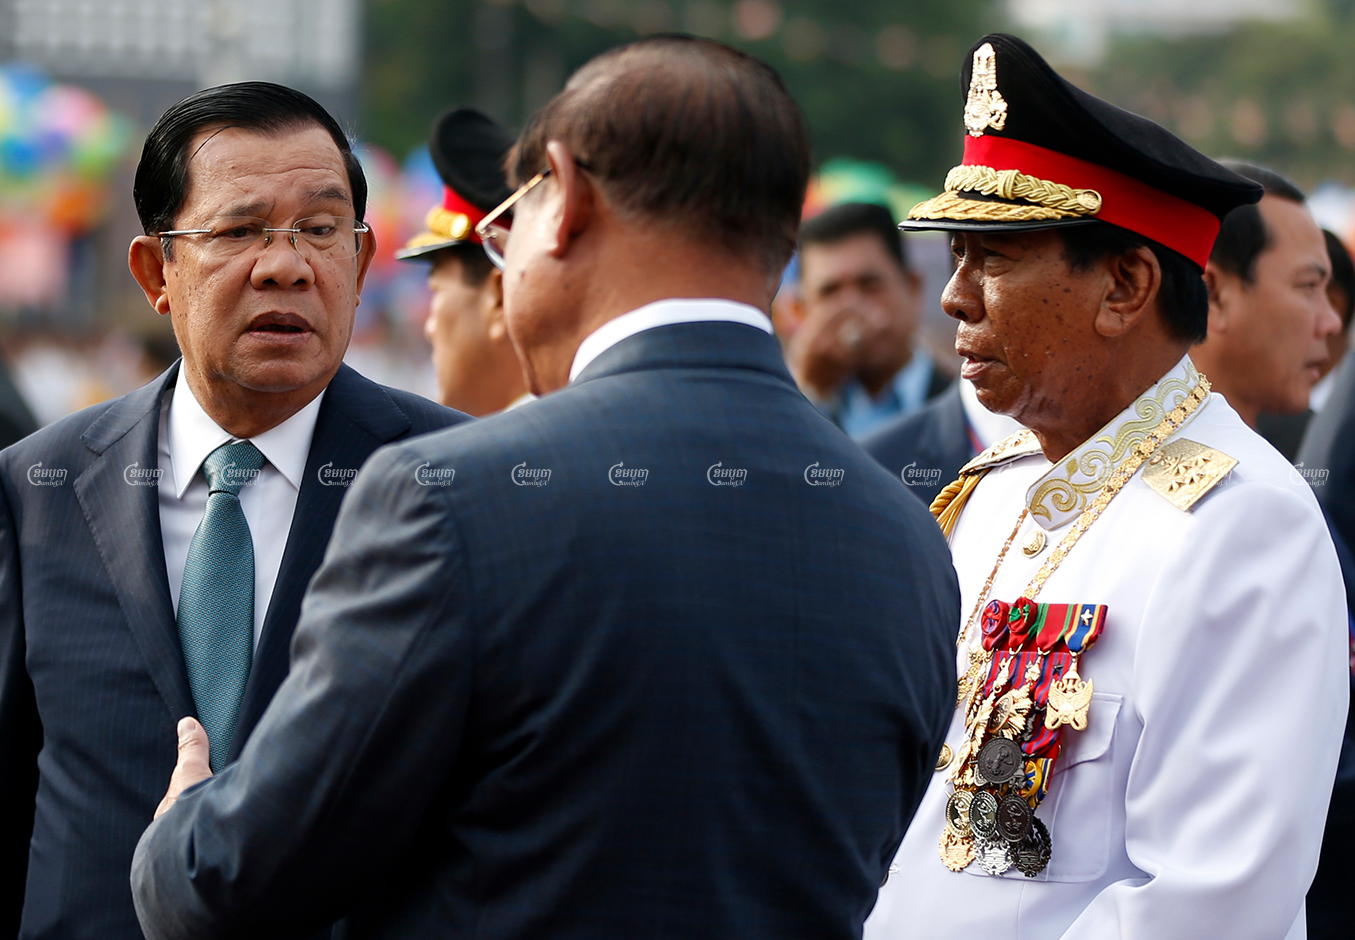 From left to right, Hun Sen, Sar Kheng and Tea Banh at an Independence Day ceremony in Phnom Penh, November 9, 2019. CamboJA/ Pring Samrang